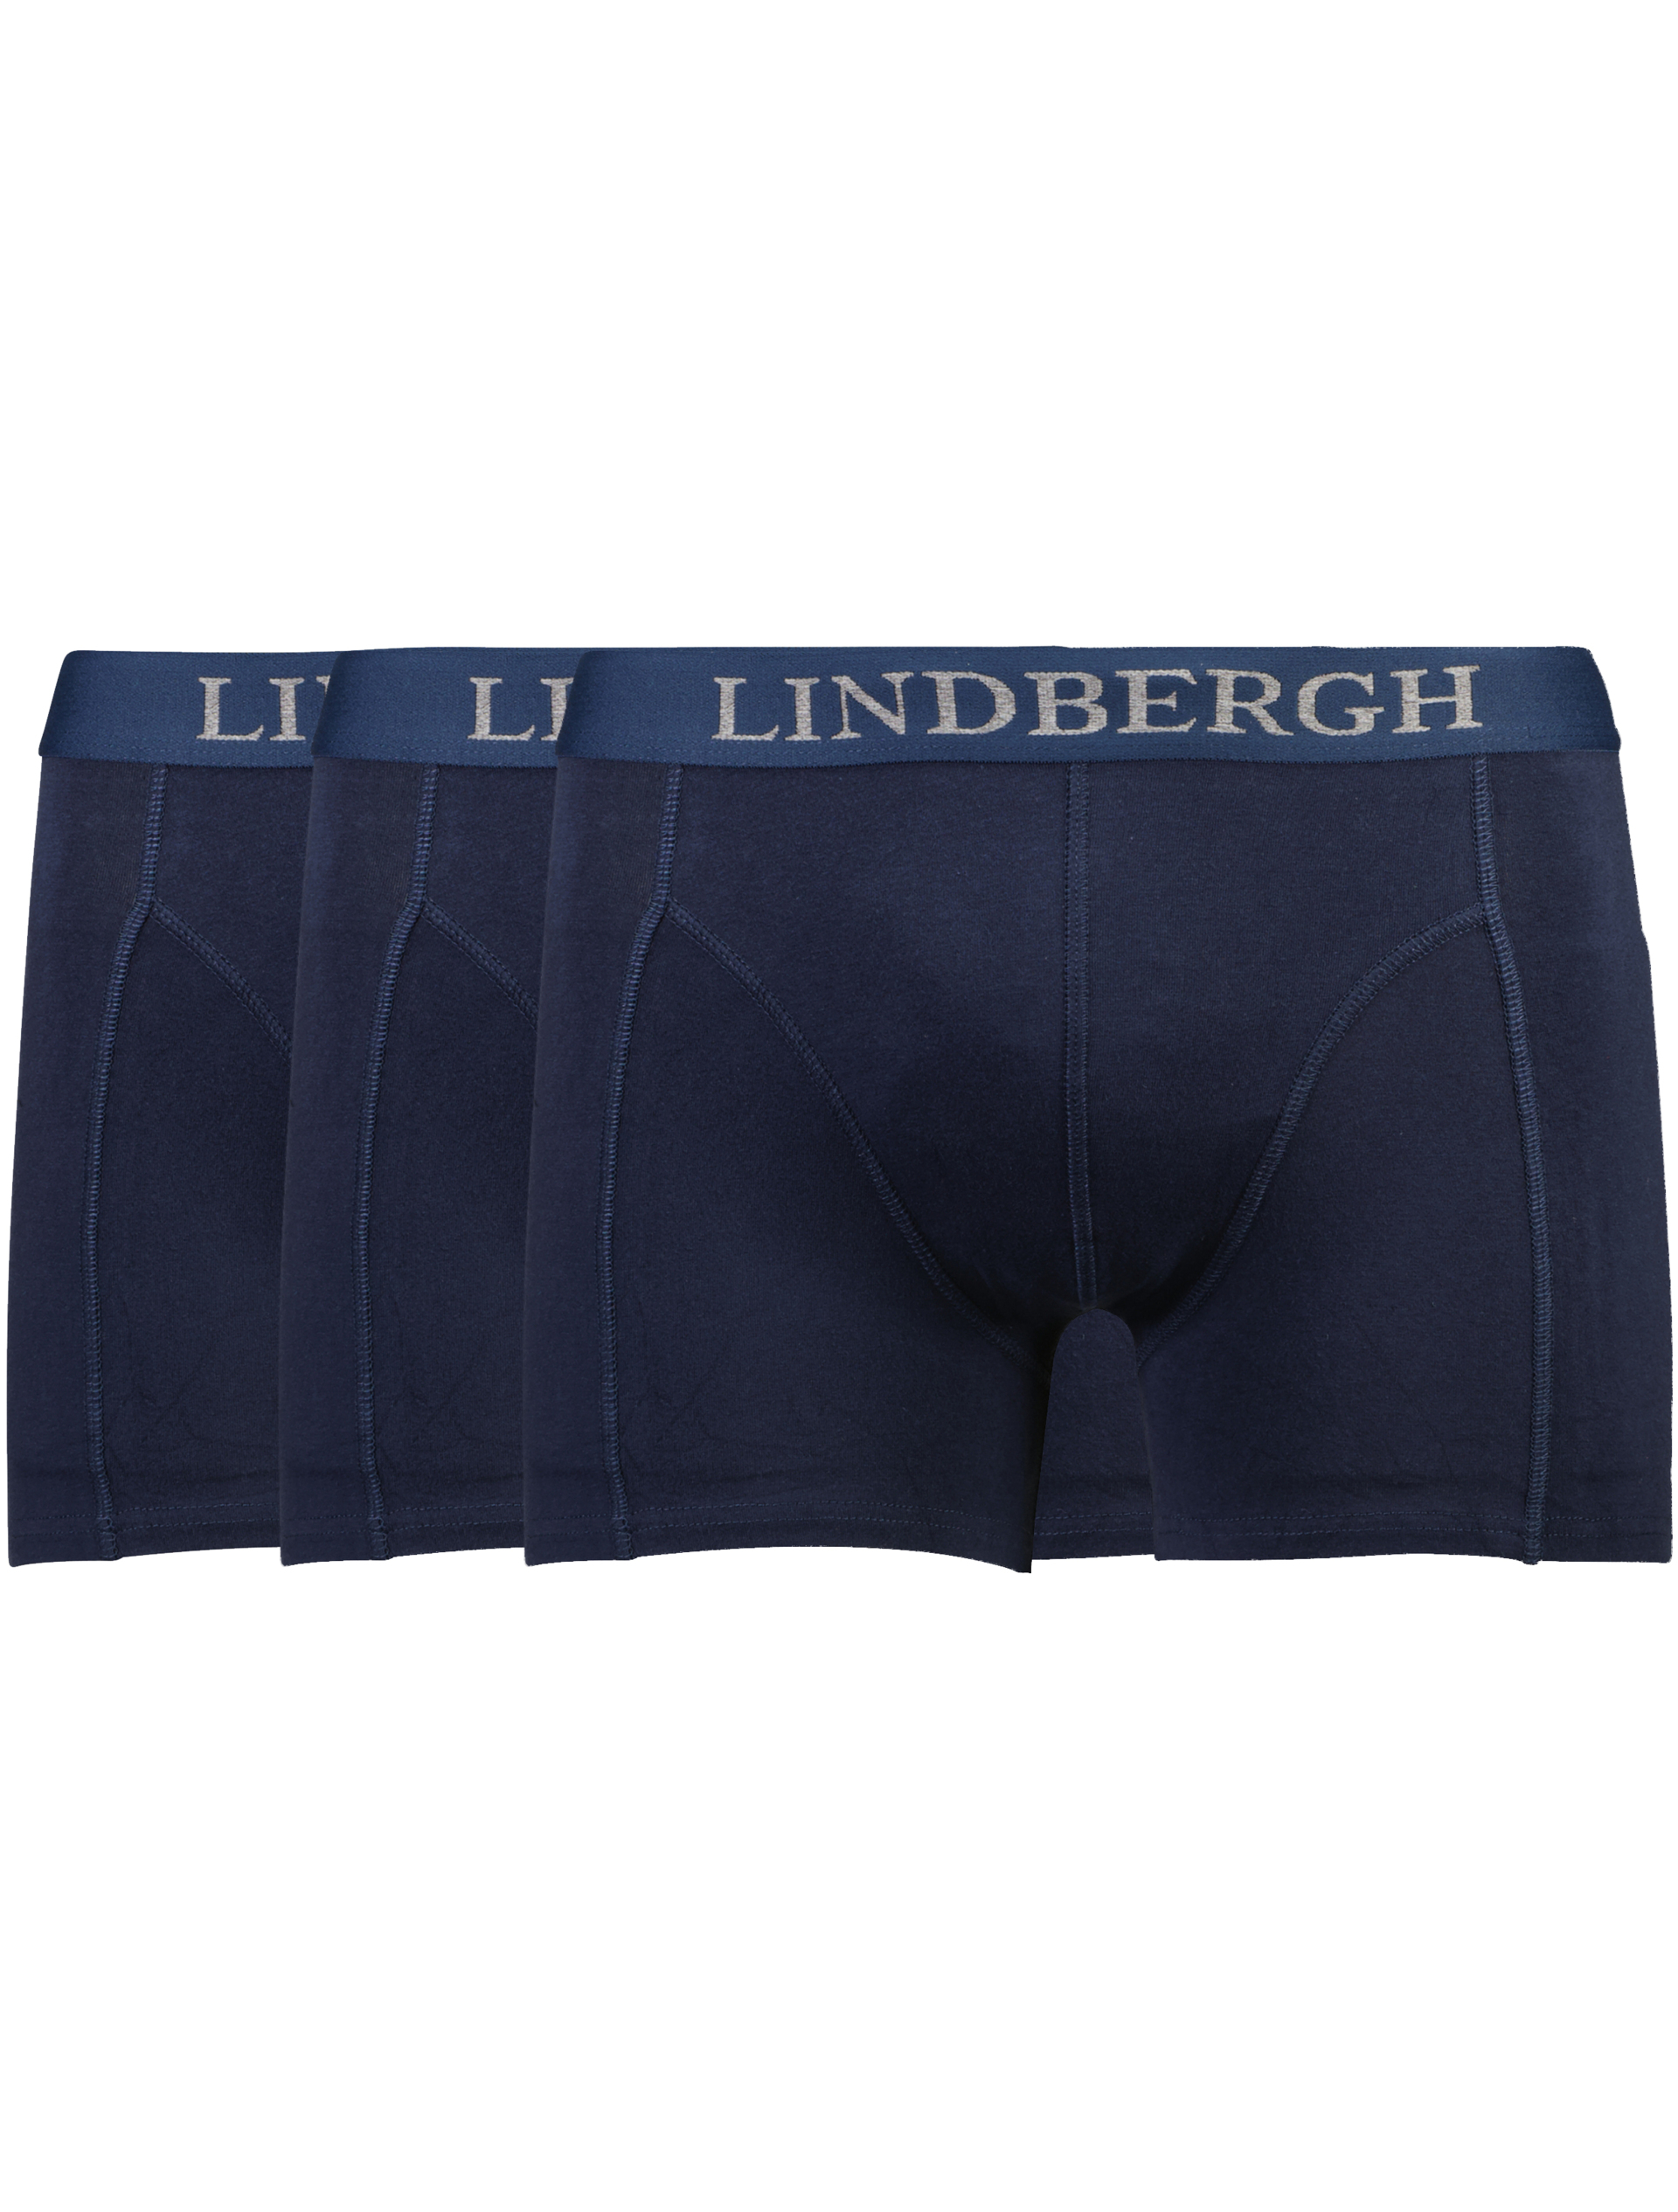 Lindbergh Boxershorts blauw / navy